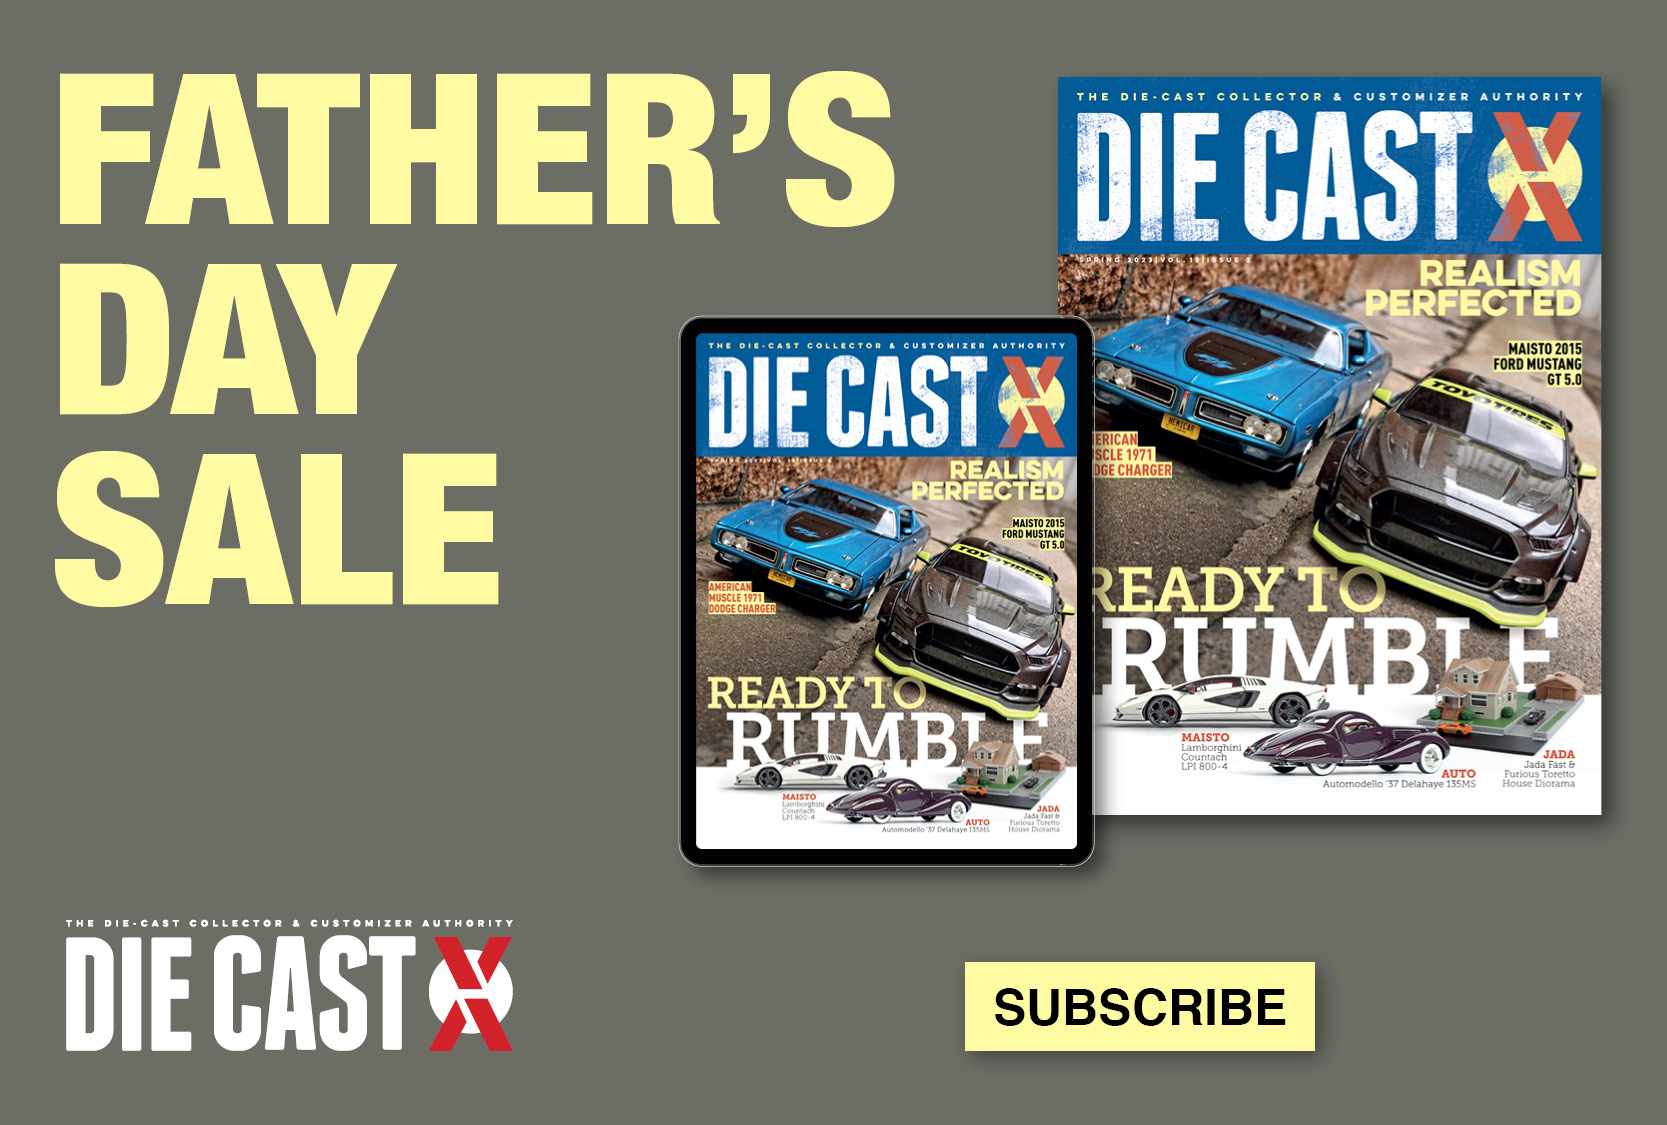 Diecast Model Cars | Diecast Magazine | Diecast Collectible Car News